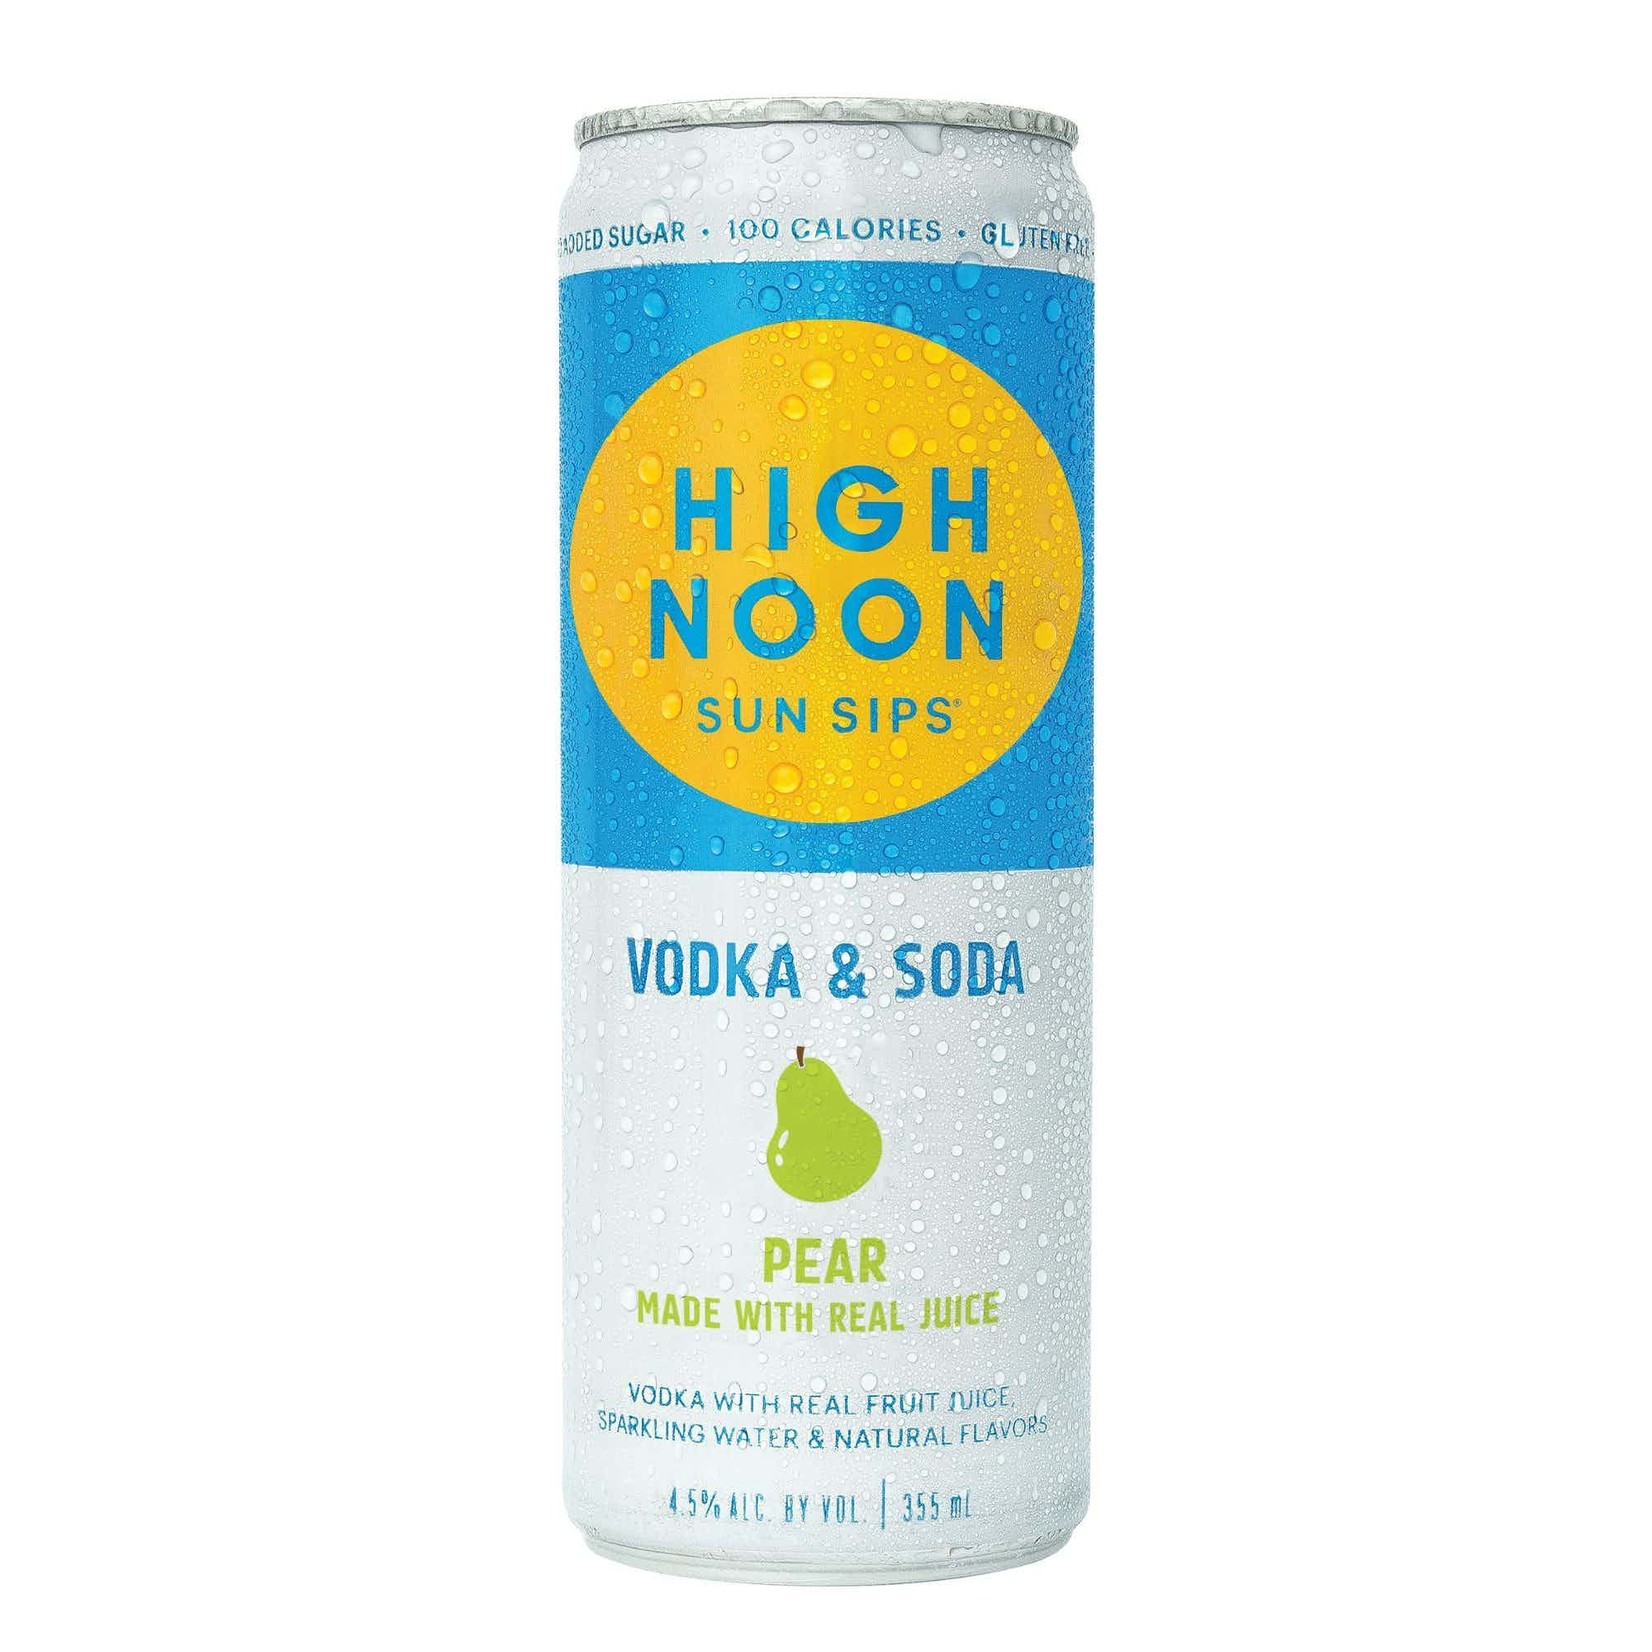 High Noon Vodka Soda Pear